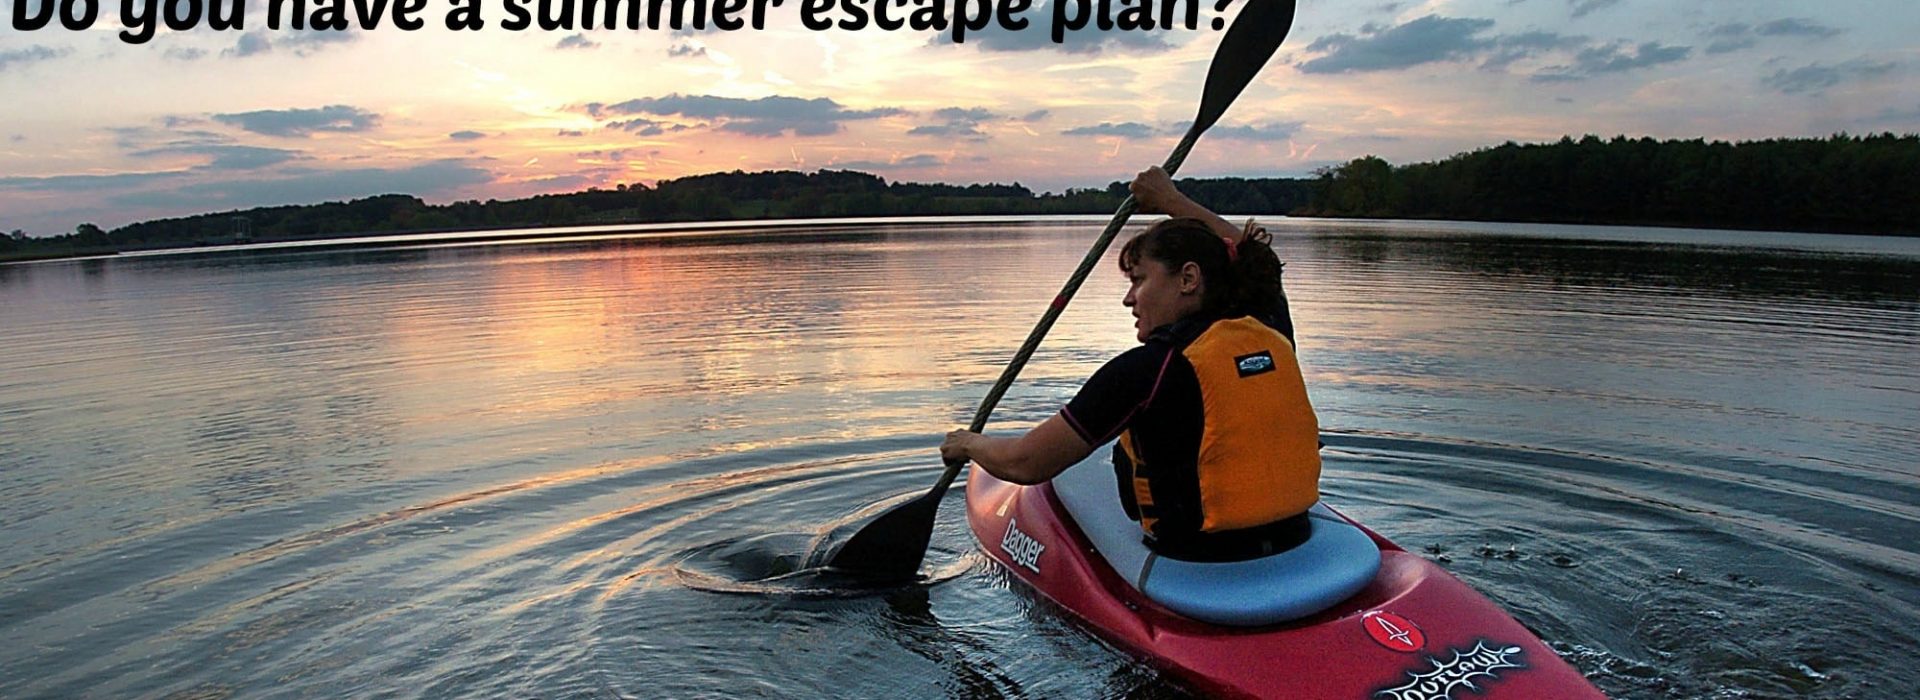 girl paddling a red kayak on a Vermont lake